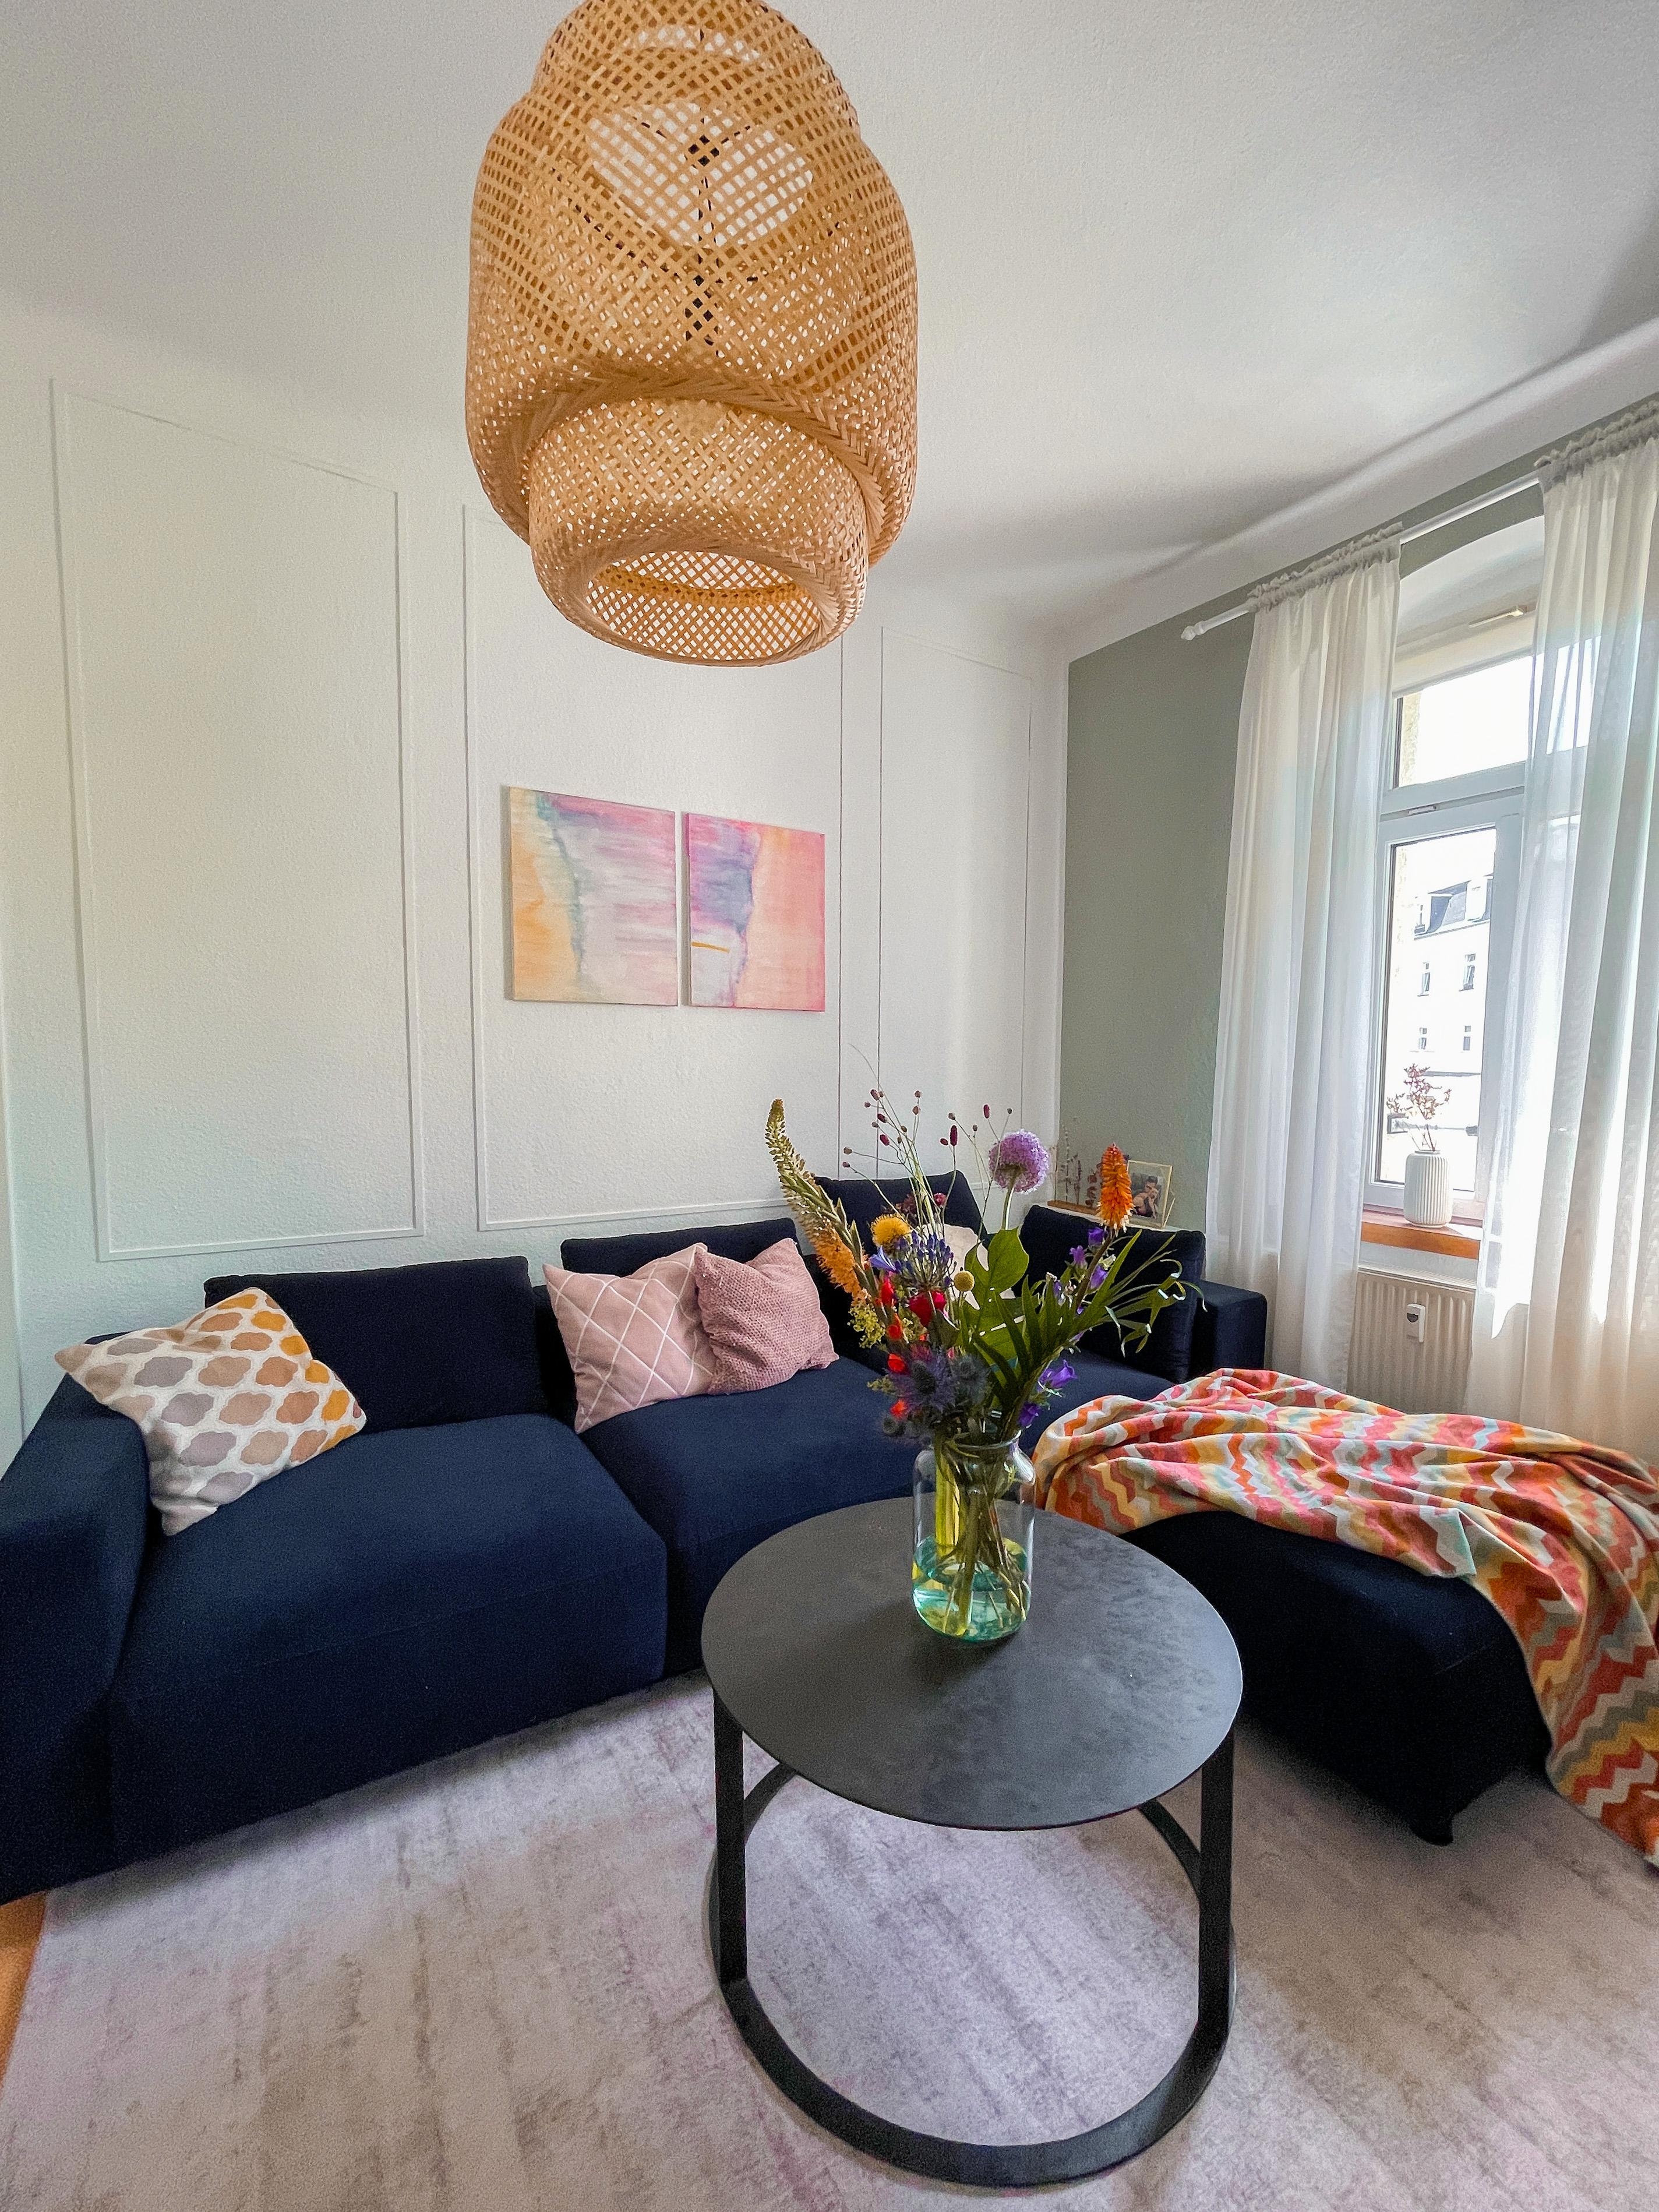 Neues Sofa 💙 #couch #wohnzimmer #livingroom #blue #sofa